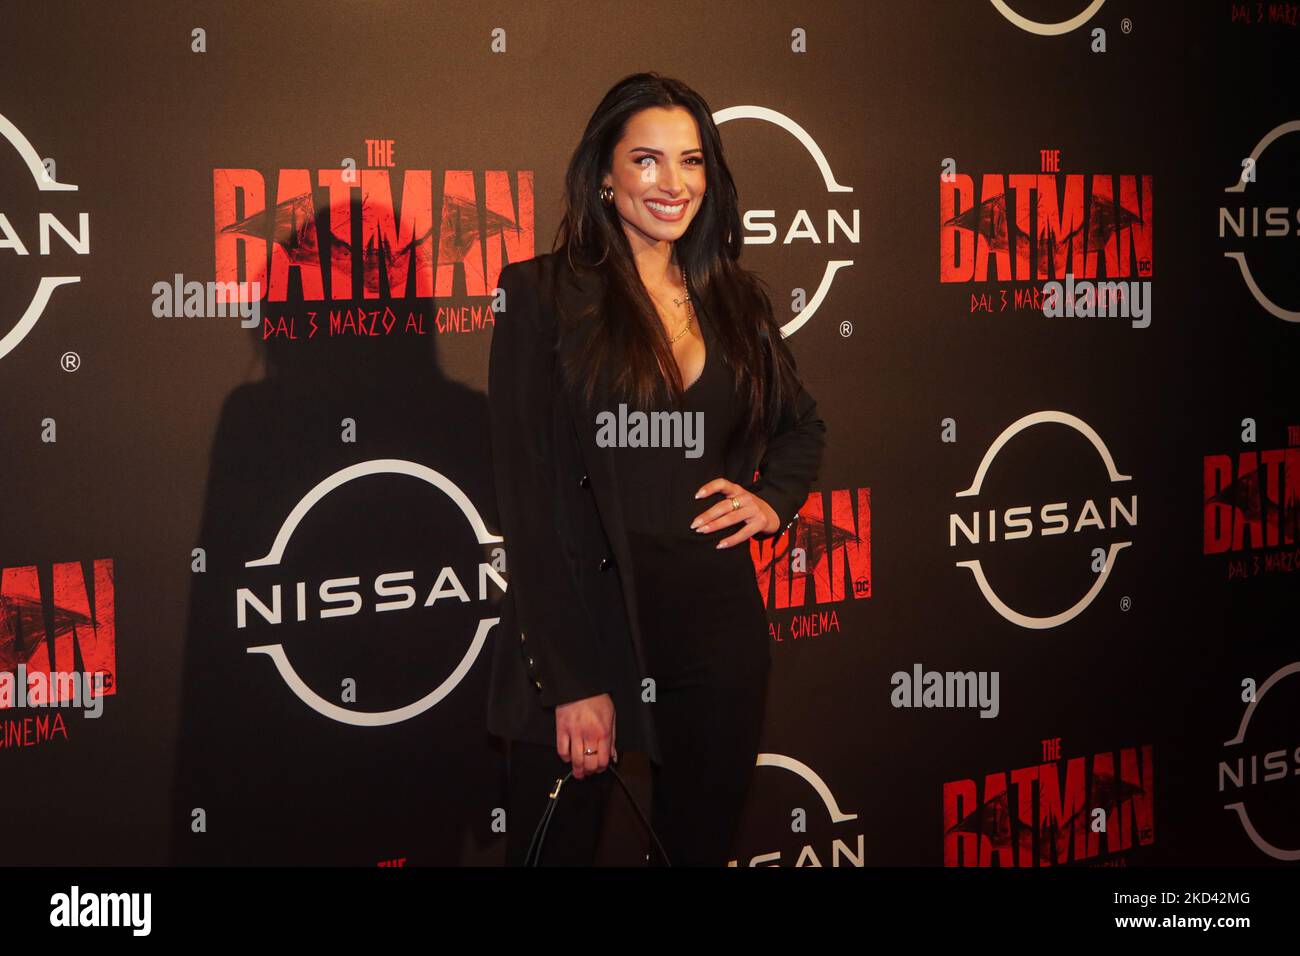 Alessia Prete arriving at the premiere of The Batman at Odeon Cinema on March 01, 2022 in Milan, Italy. (Photo by Mairo Cinquetti/NurPhoto) Stock Photo